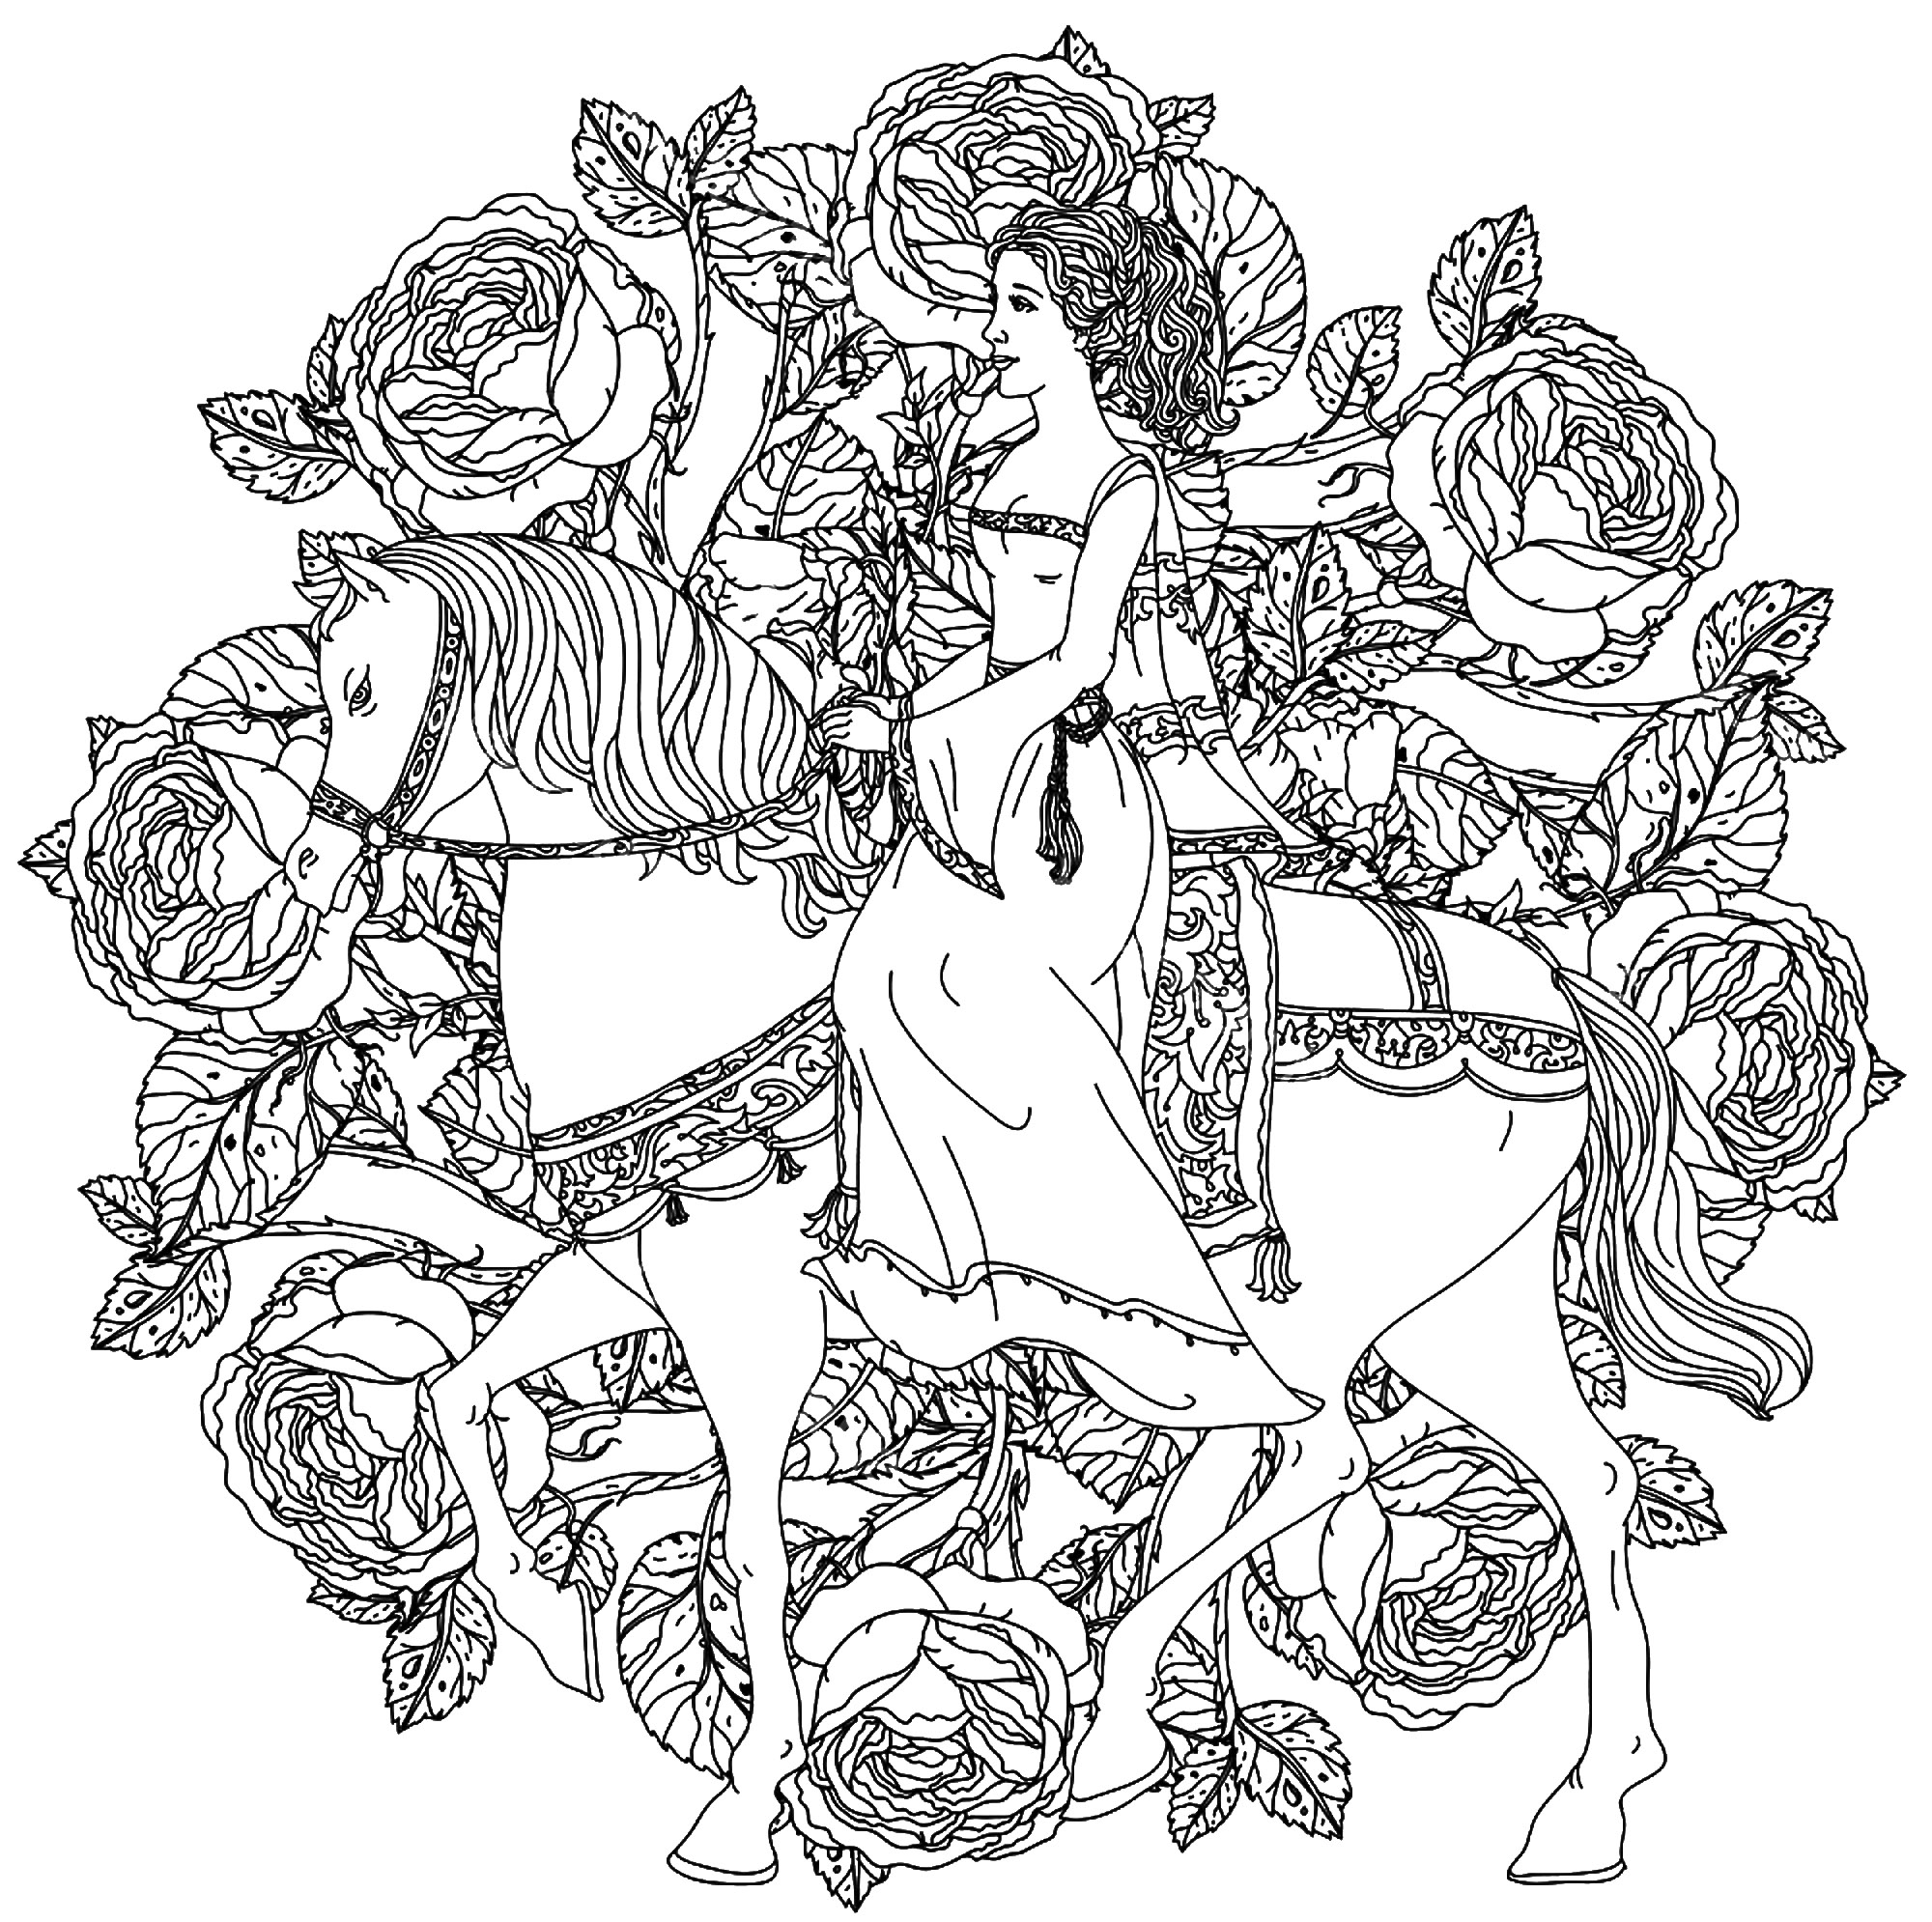 Mandala with a Princess riding her horse